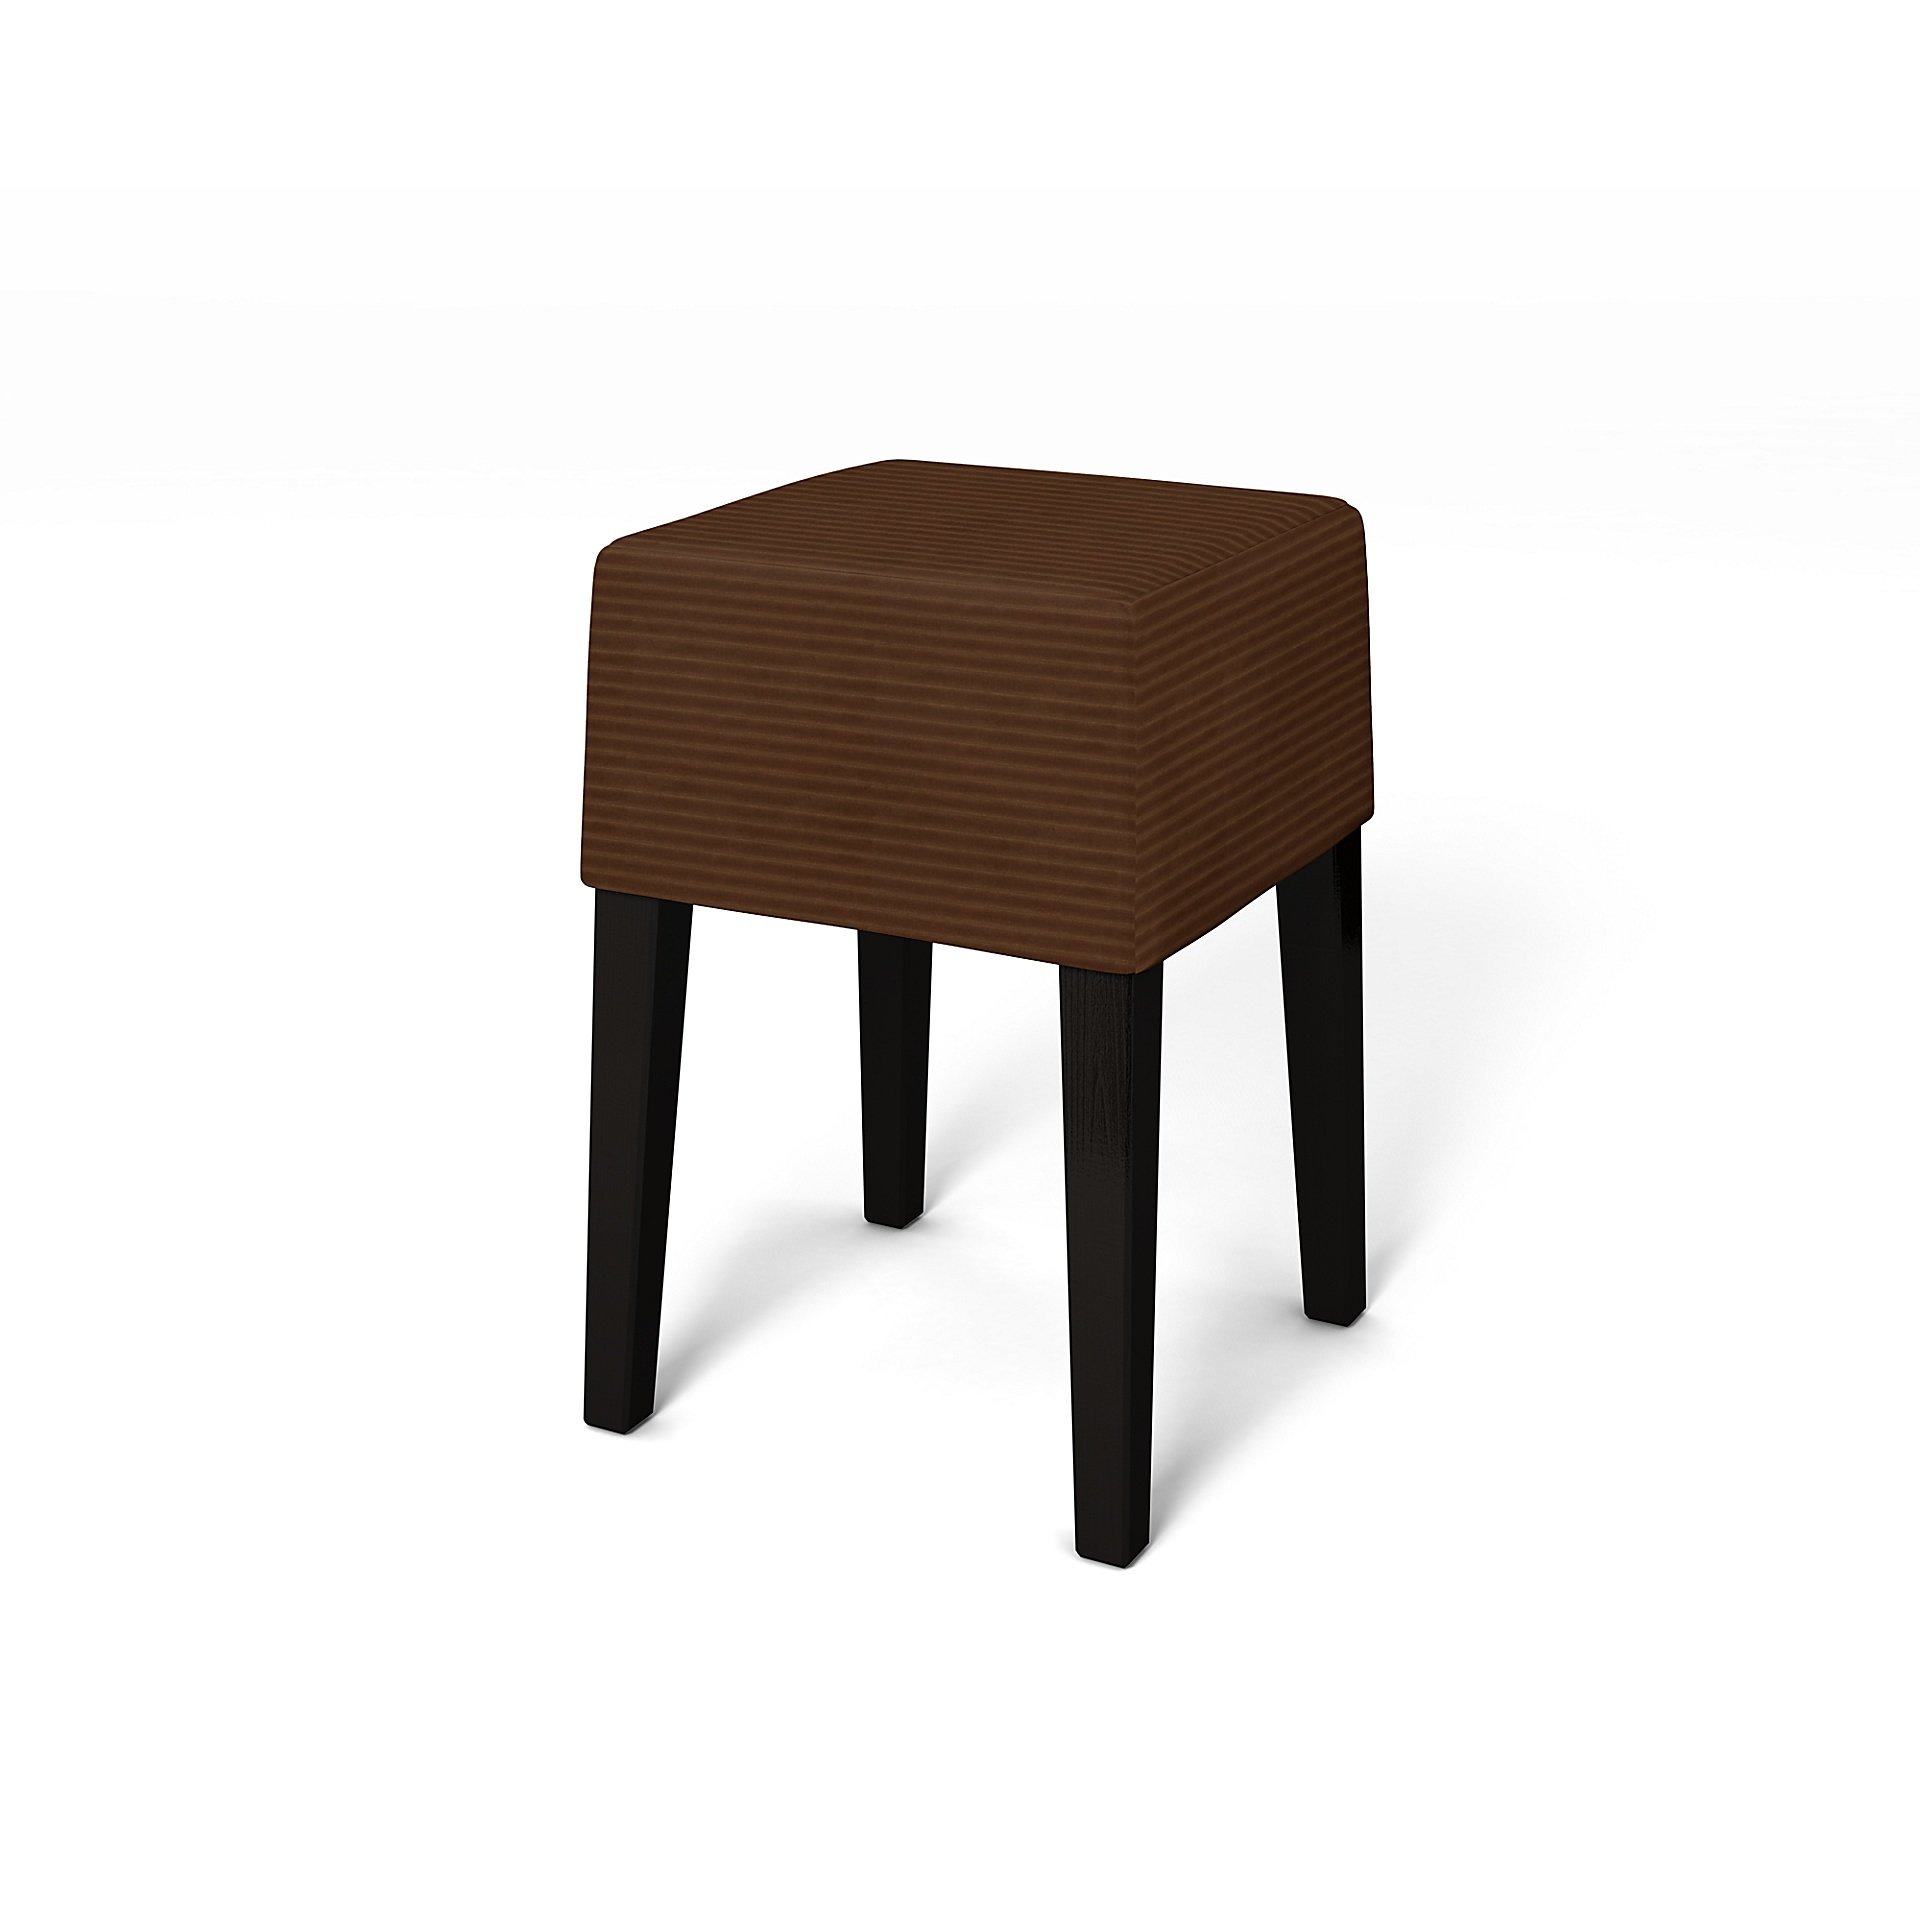 IKEA - Nils Stool Cover, Chocolate Brown, Corduroy - Bemz